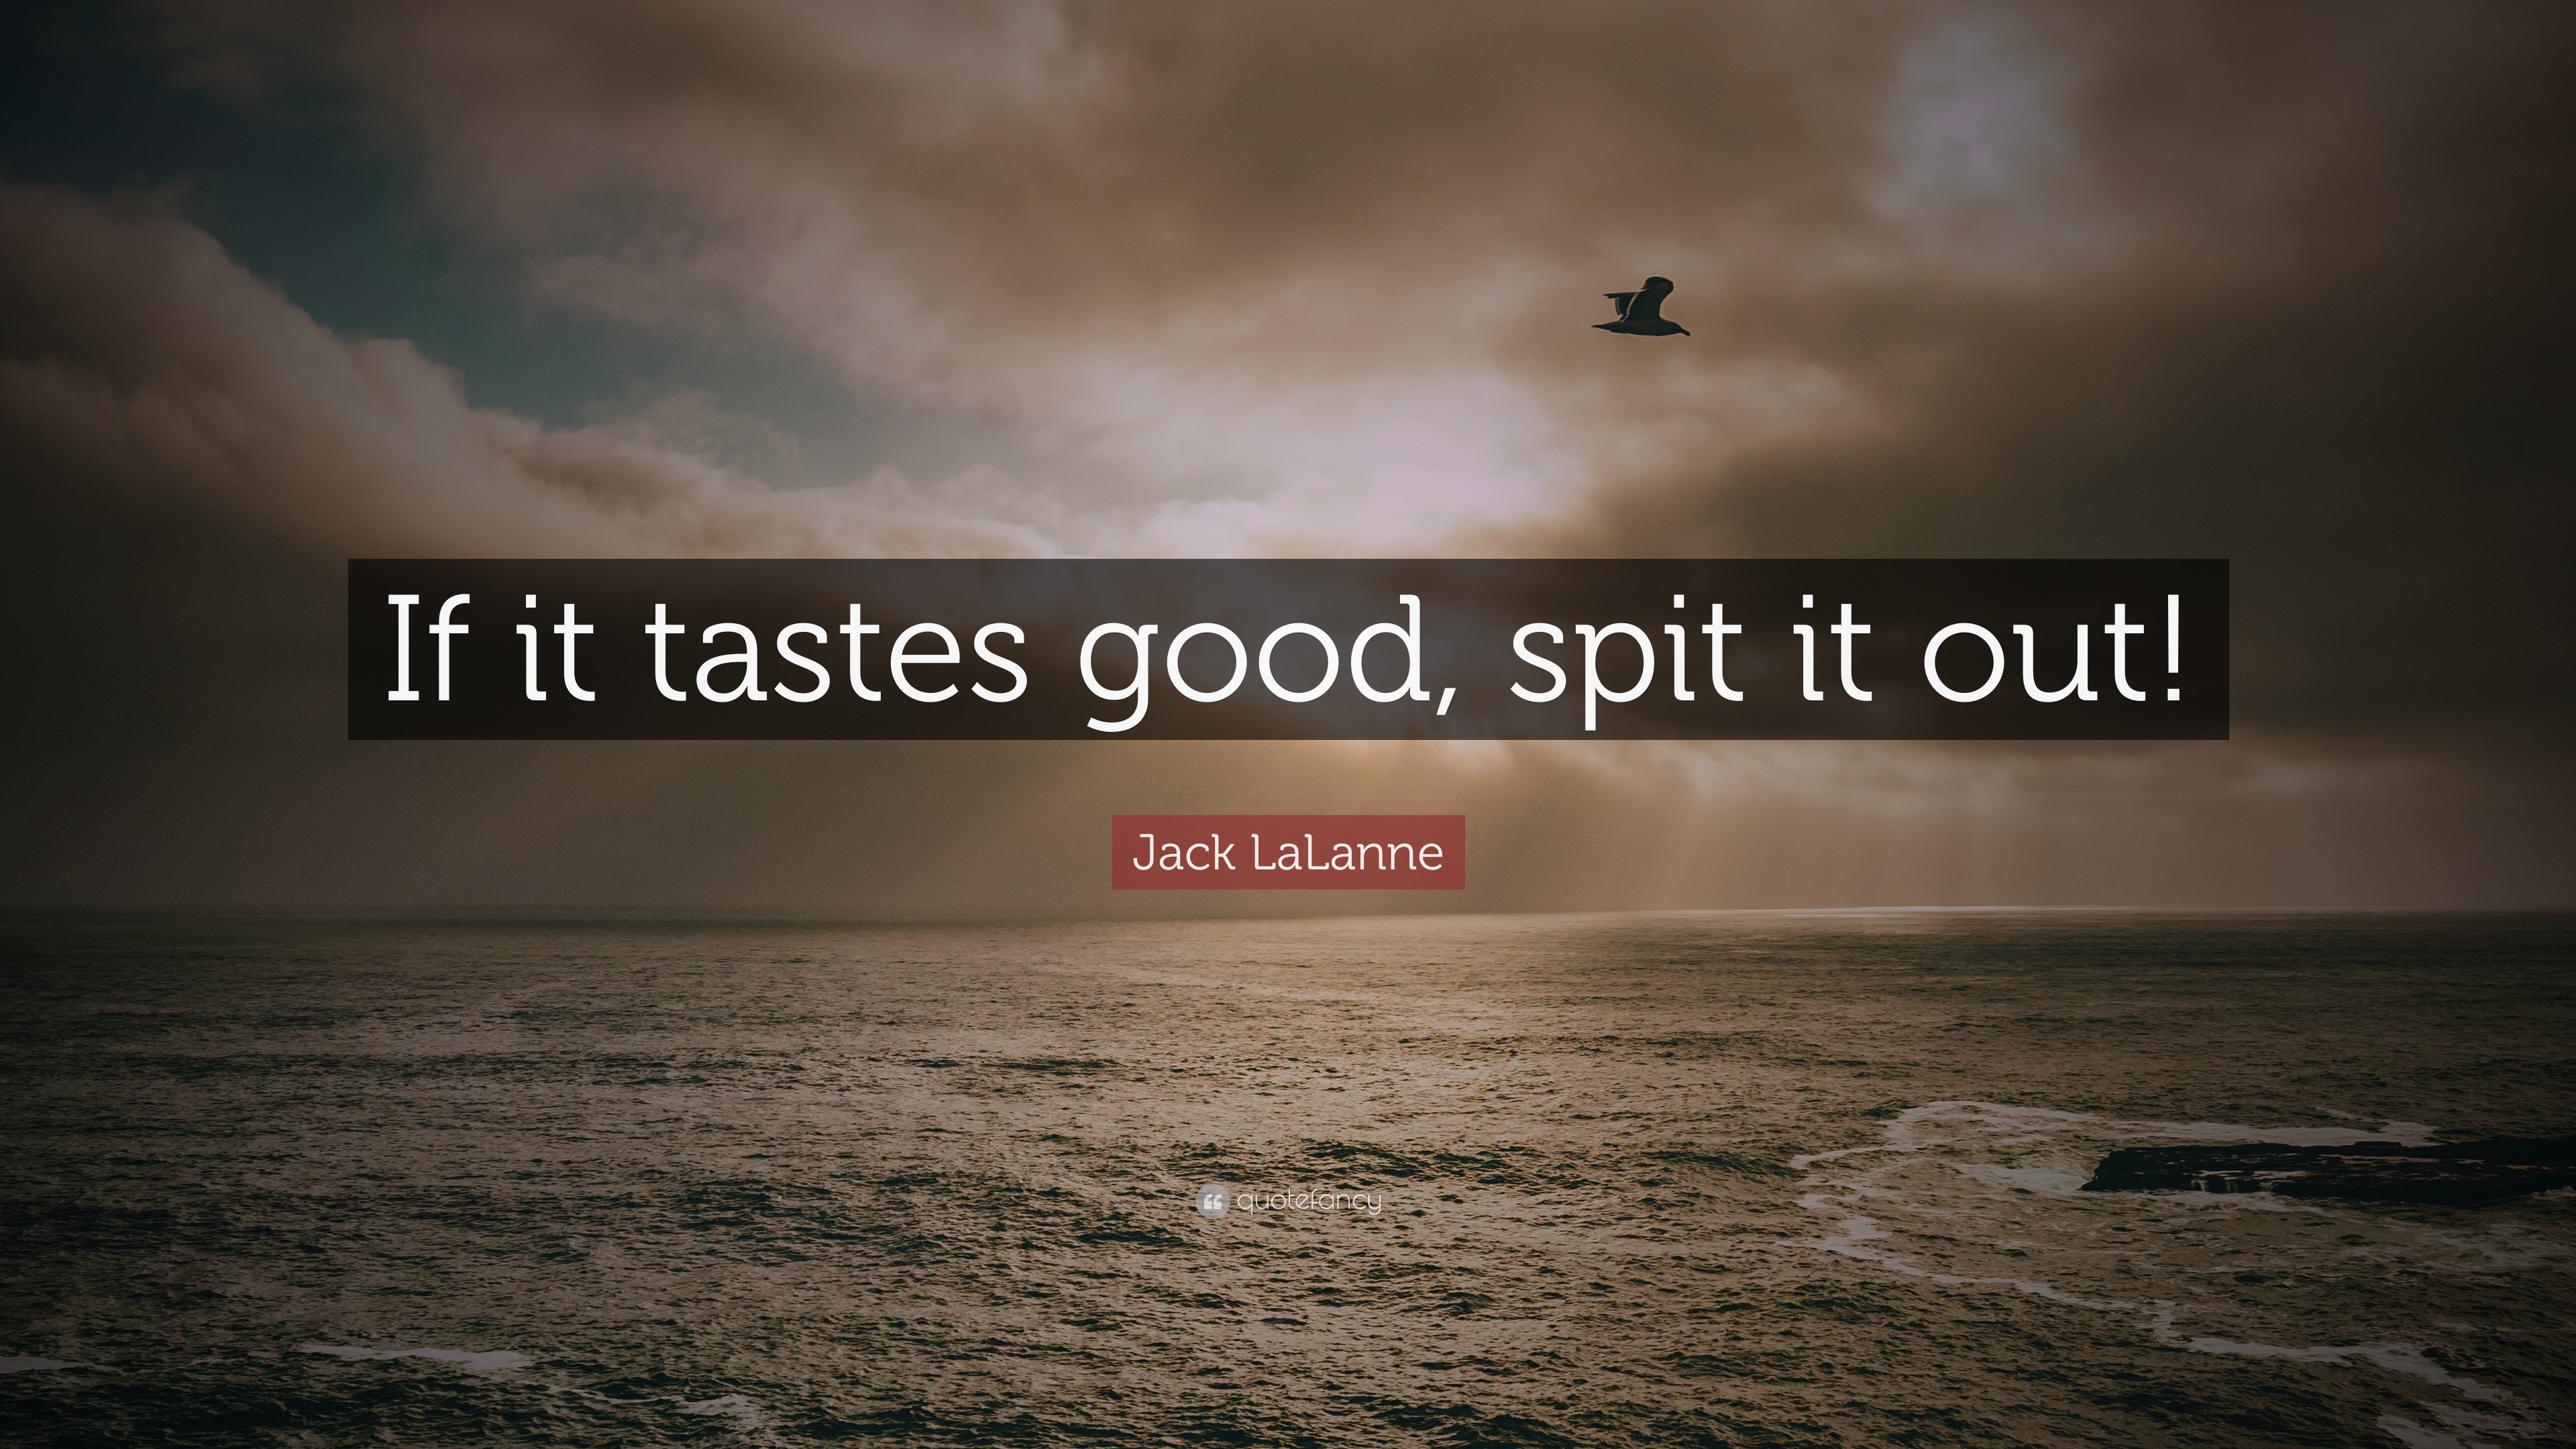 Jack LaLanne Quote: “If it tastes good, spit it out!” (7 wallpapers If It Tastes Good Spit It Out